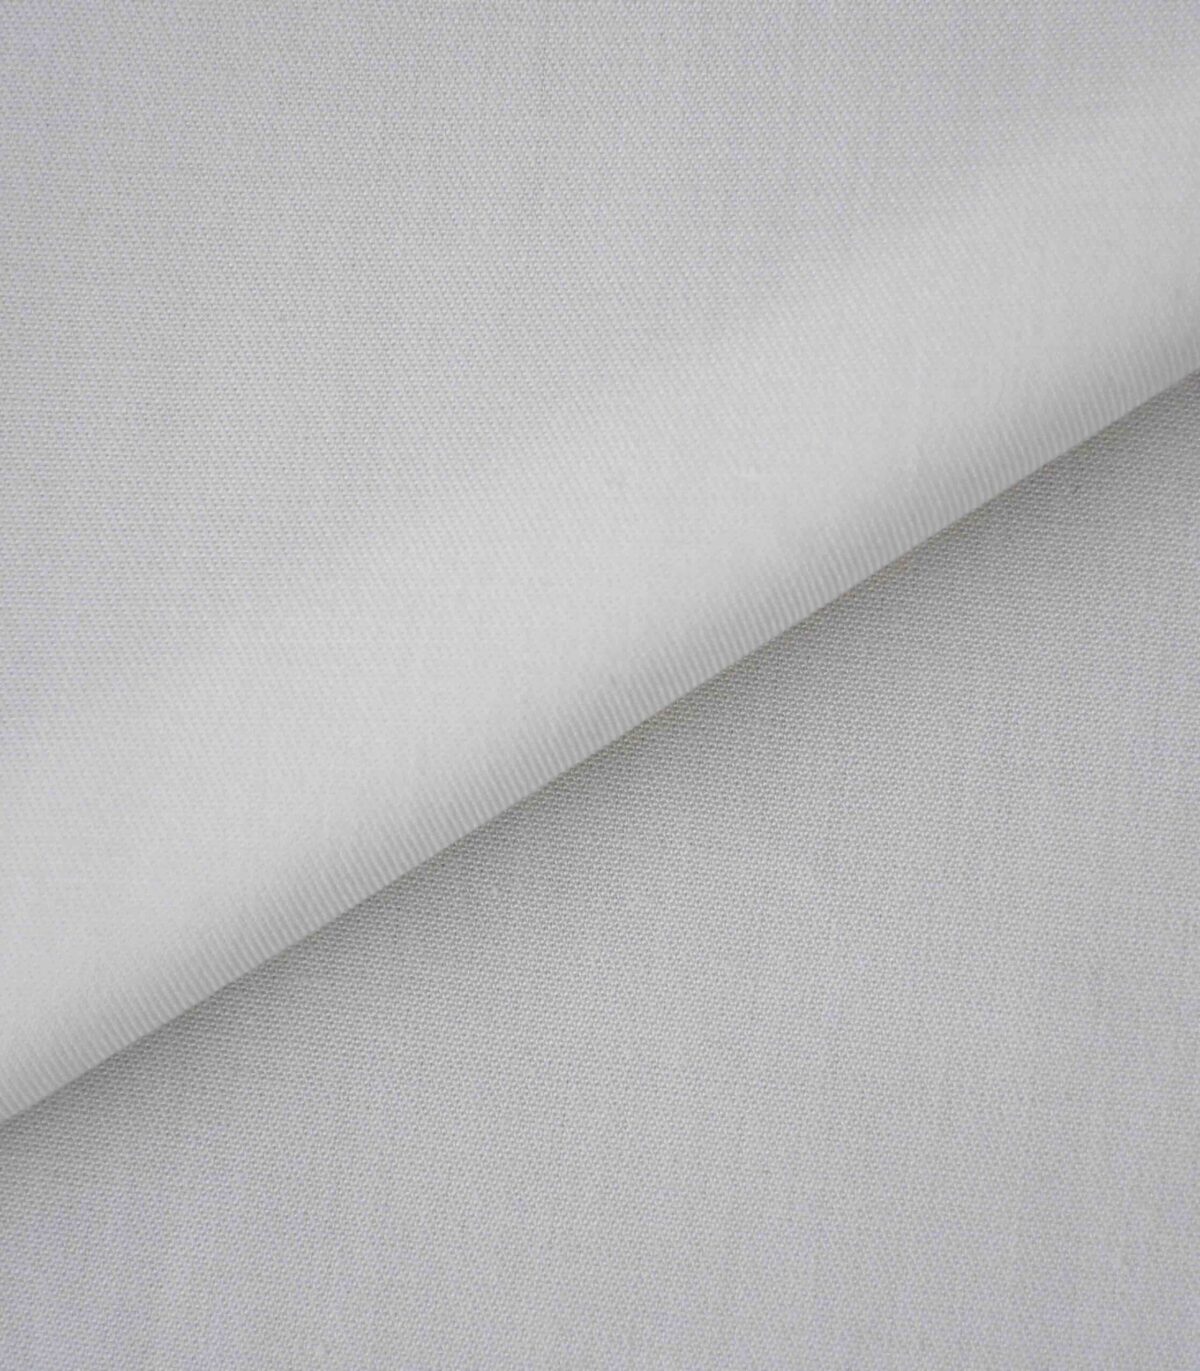 Cotton Modal RFD Woven Fabric